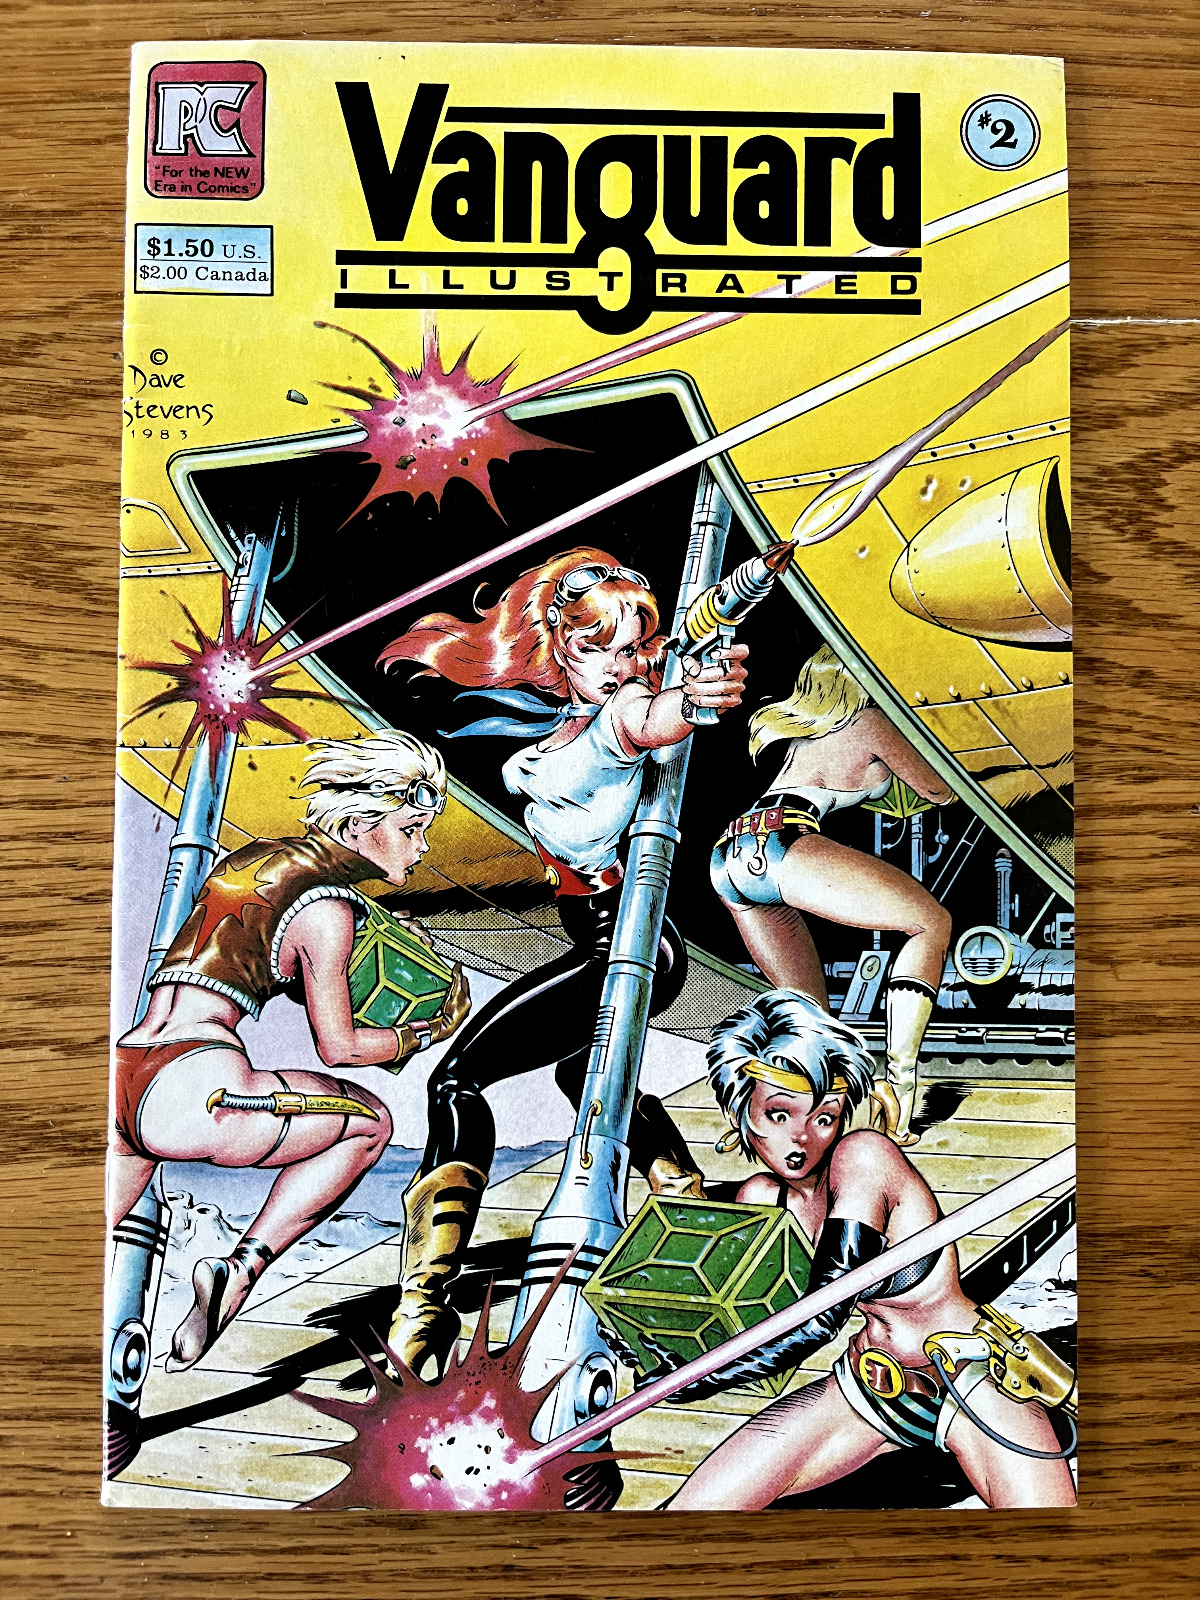 Vanguard Illustrated #2 Dave Stevens Space Pirates Pacific Comics